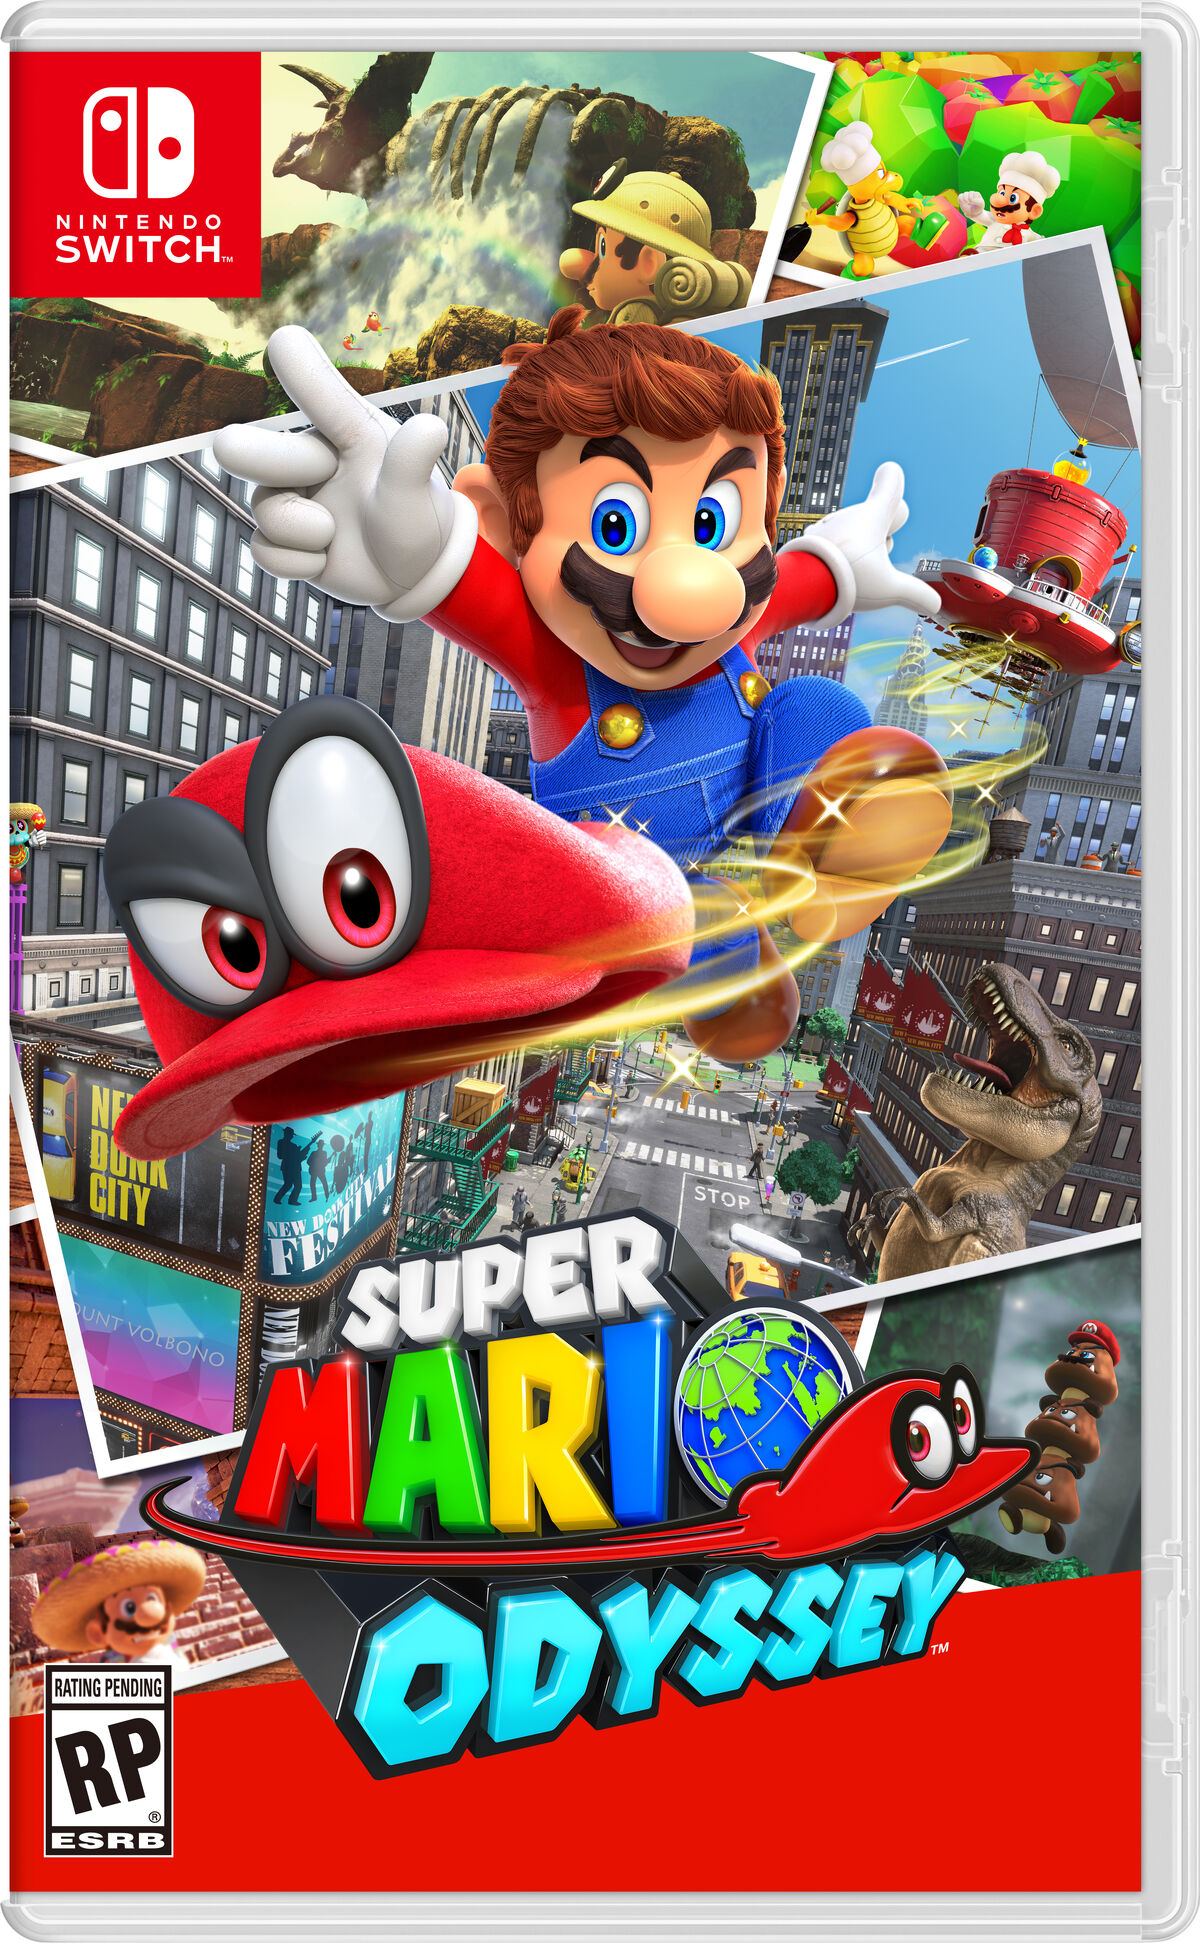 Super Mario Odyssey Wii U Box Art Cover by darkshortyx